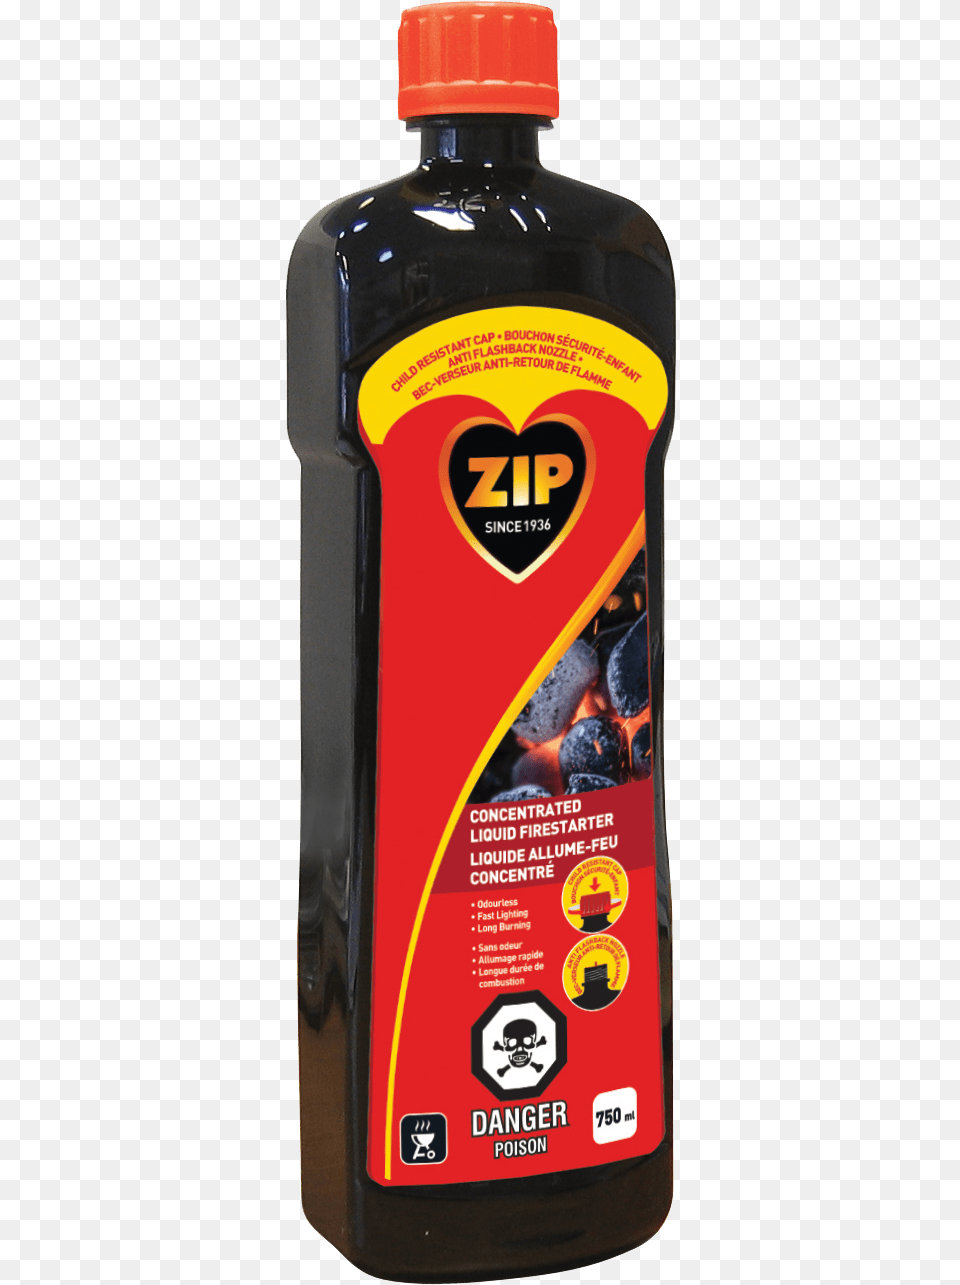 Zip Concentrated Liquid Firestarter, Food, Seasoning, Syrup, Bottle Png